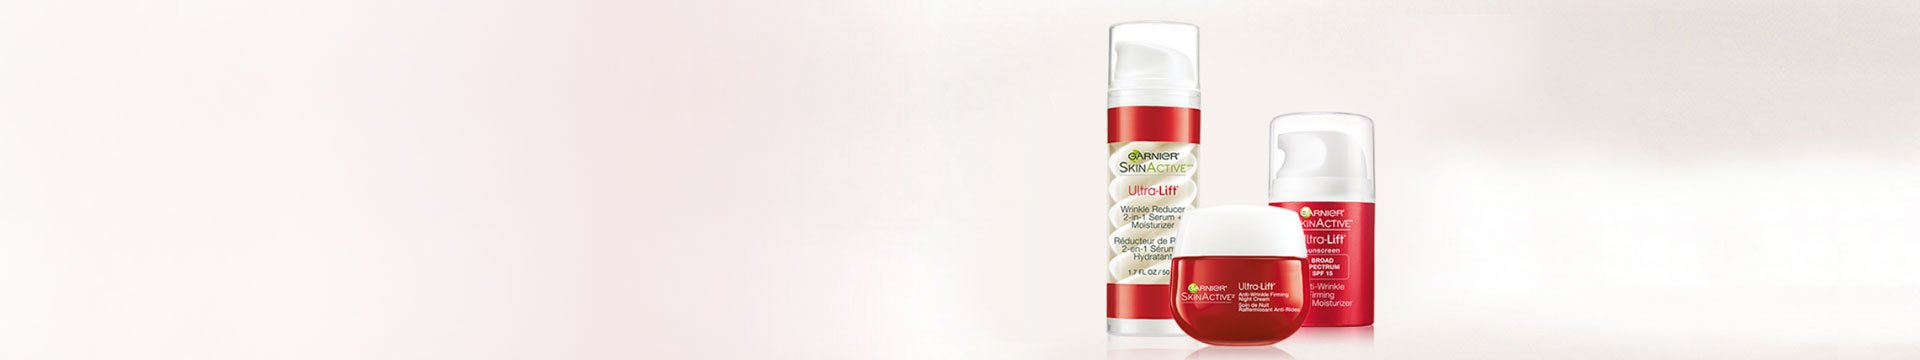 Garnier Skin Naturals Ultra Lift Anti Wrinkle Firming Day Cream (50ml) :  : Beauty